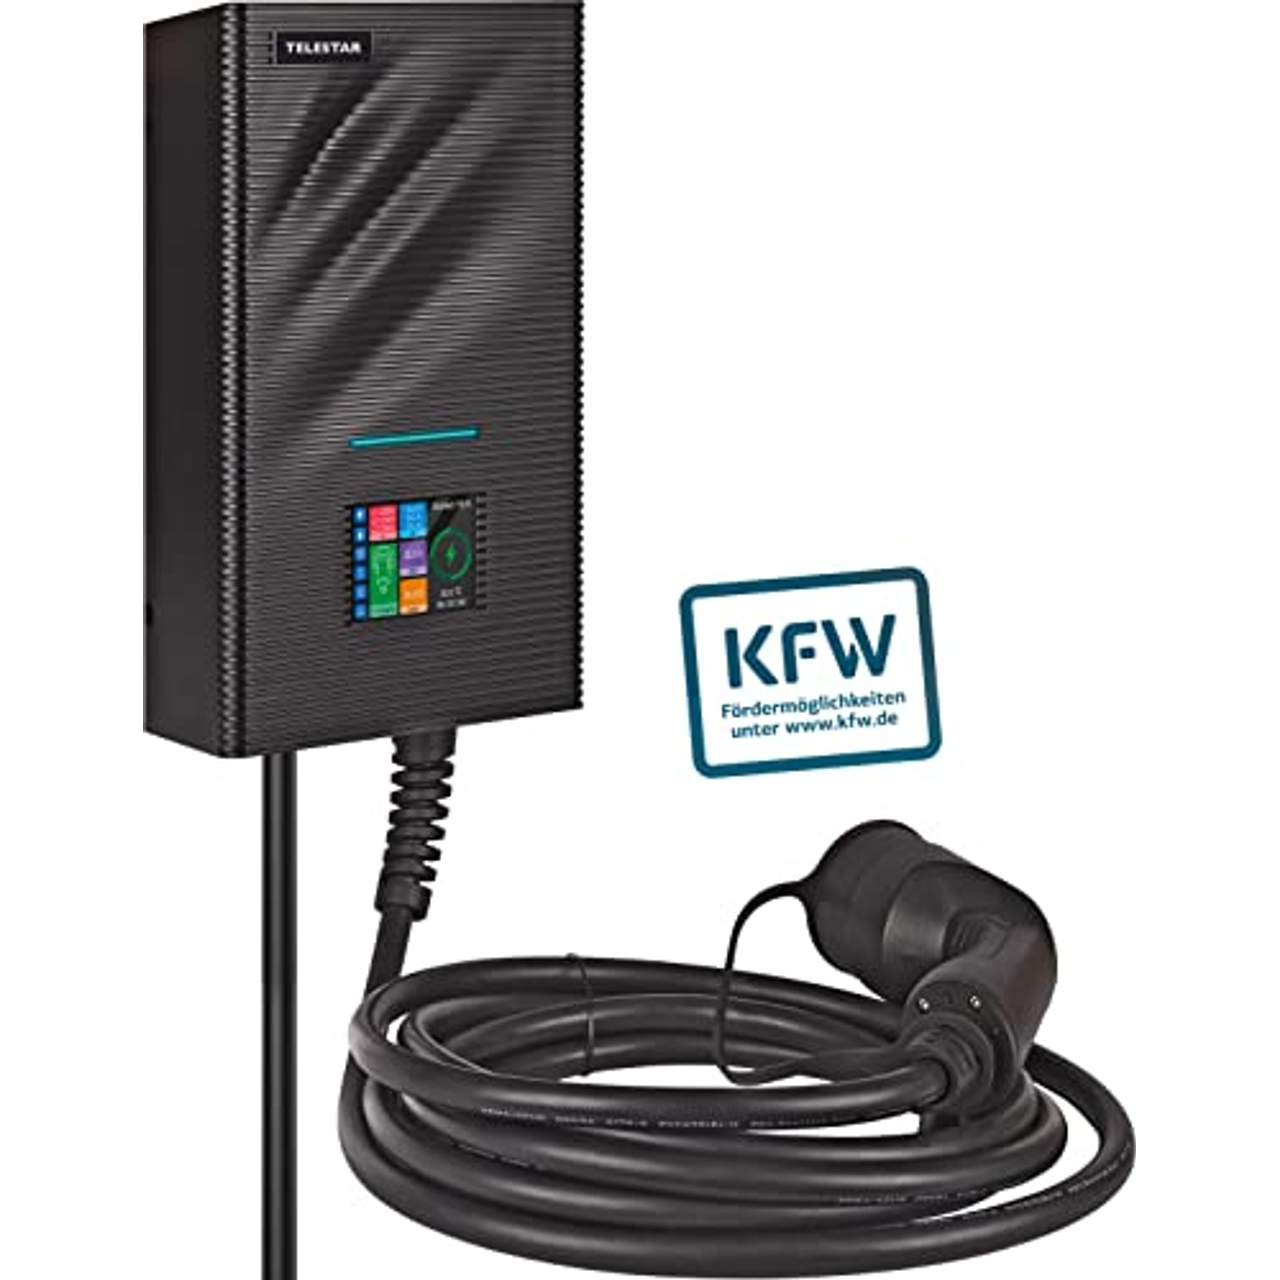 Telestar EC 311 S6-11 kW Smarte Wallbox